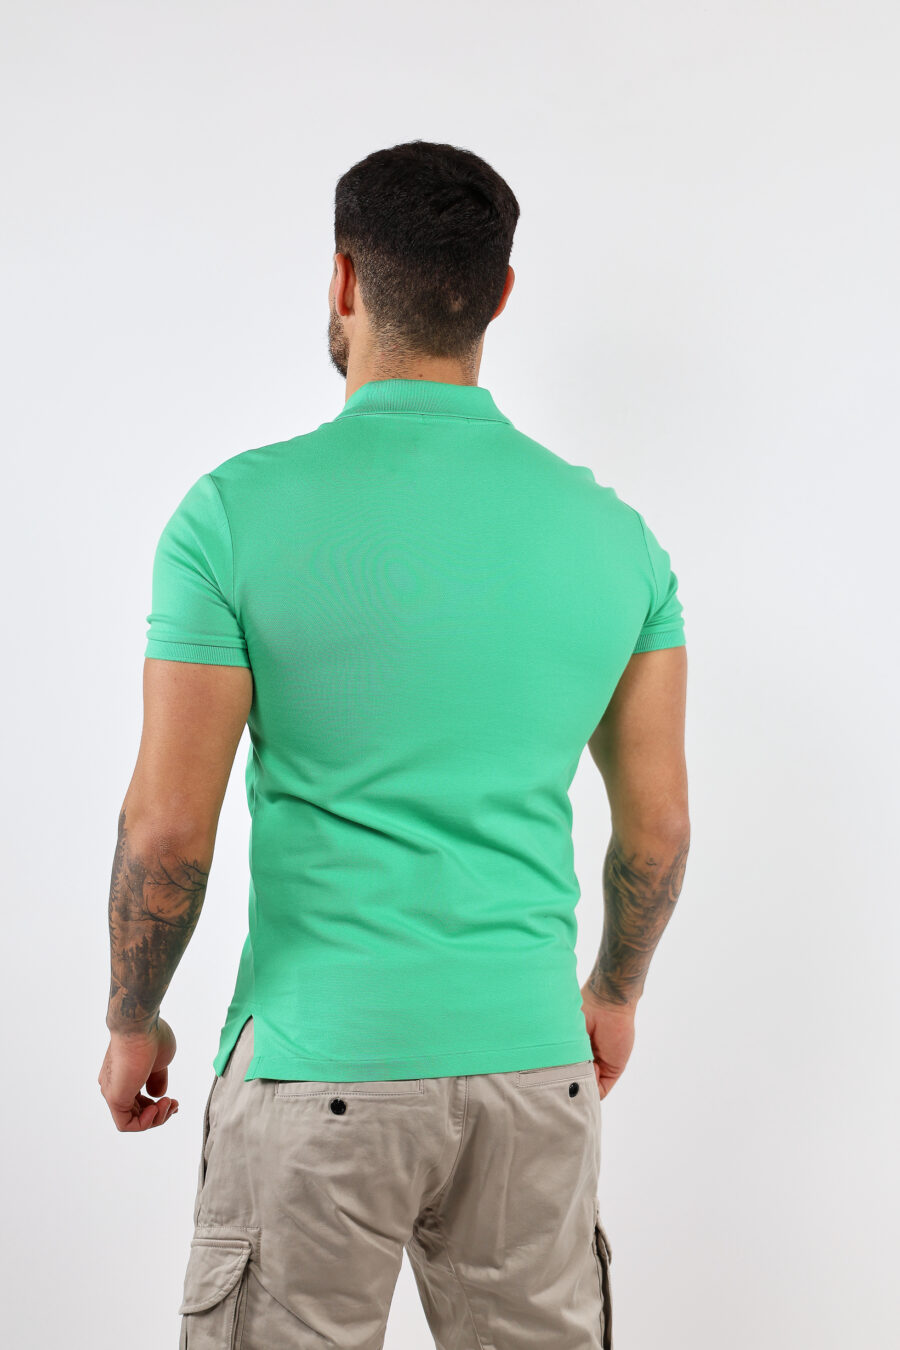 T-shirt verde e azul com mini-logotipo "polo" - BLS Fashion 175